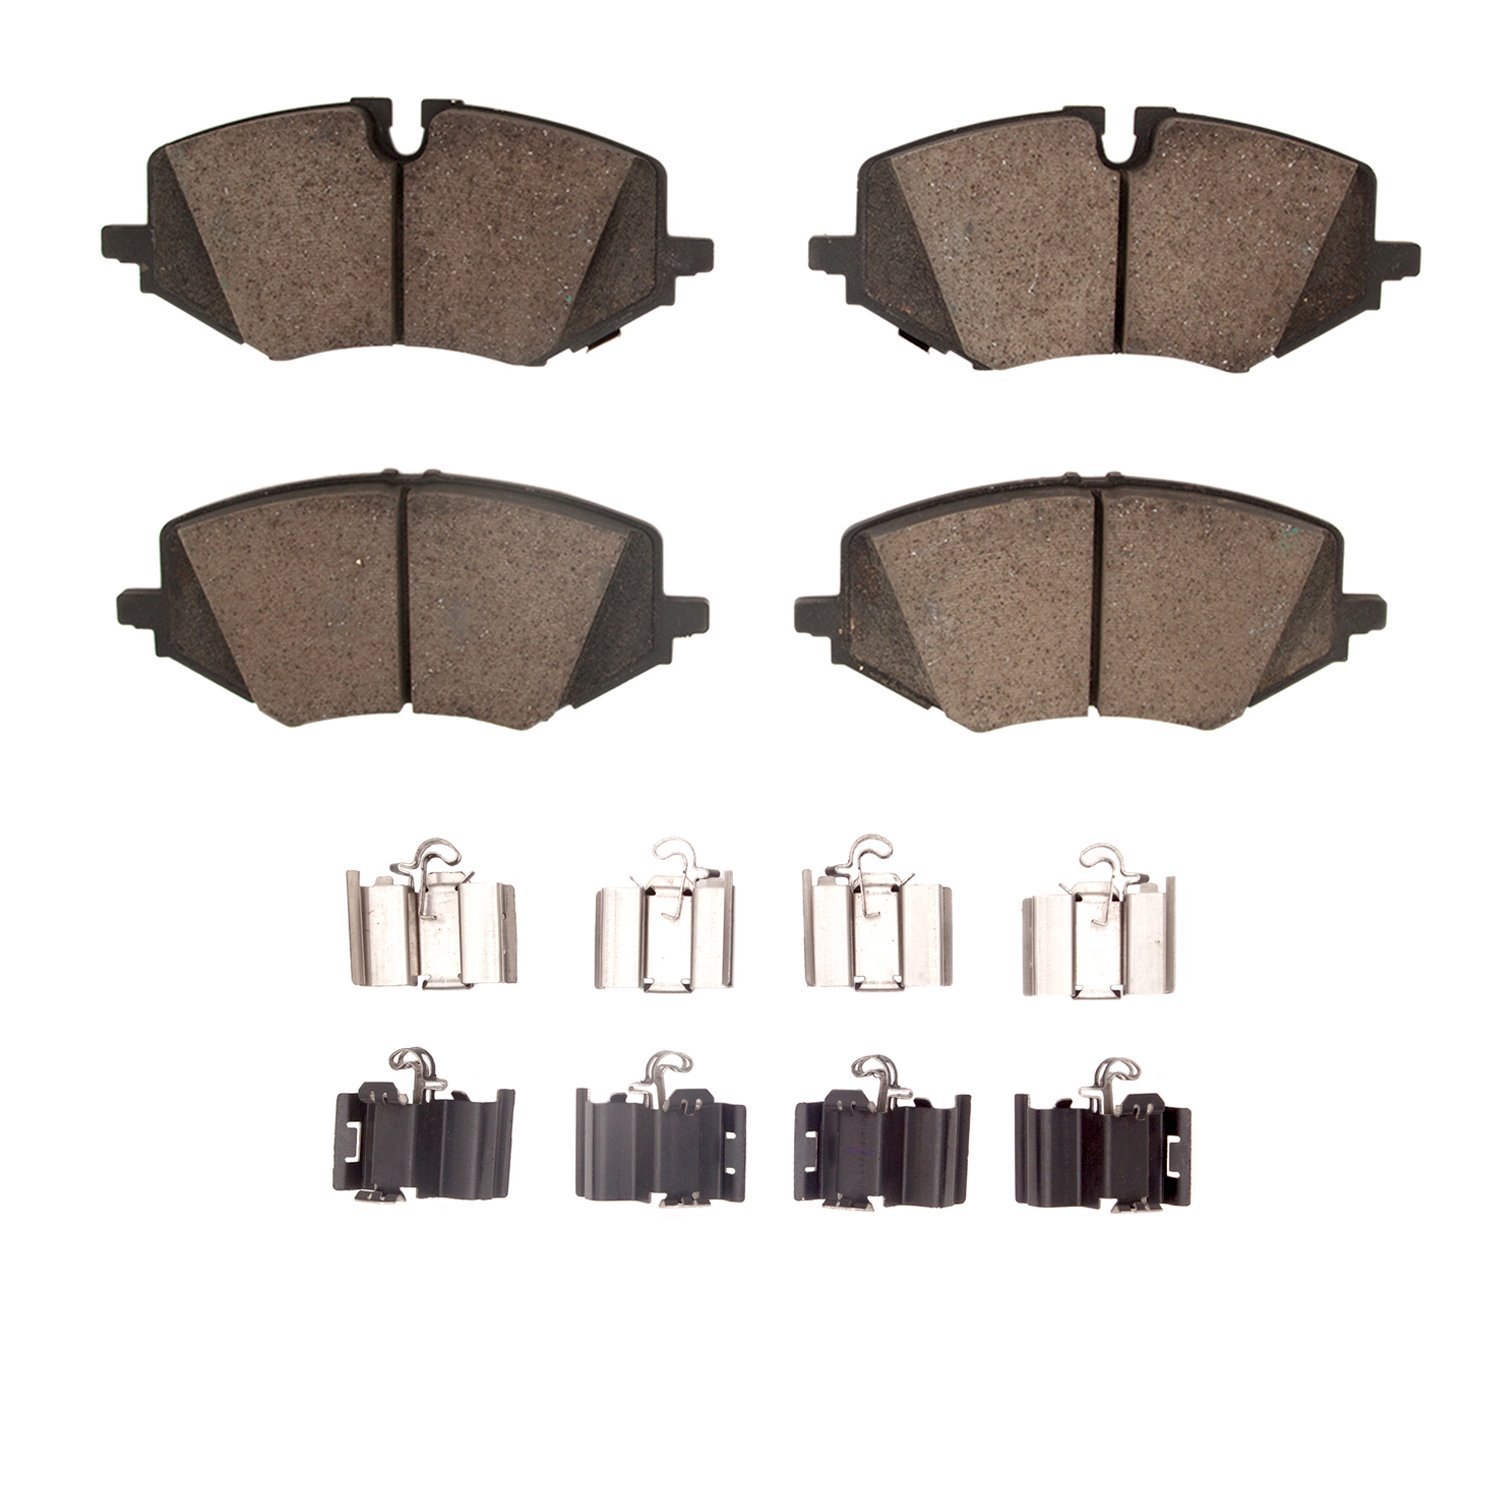 Optimum OE Brake Pads & Hardware Kit, Fits Select GM, Position: Front